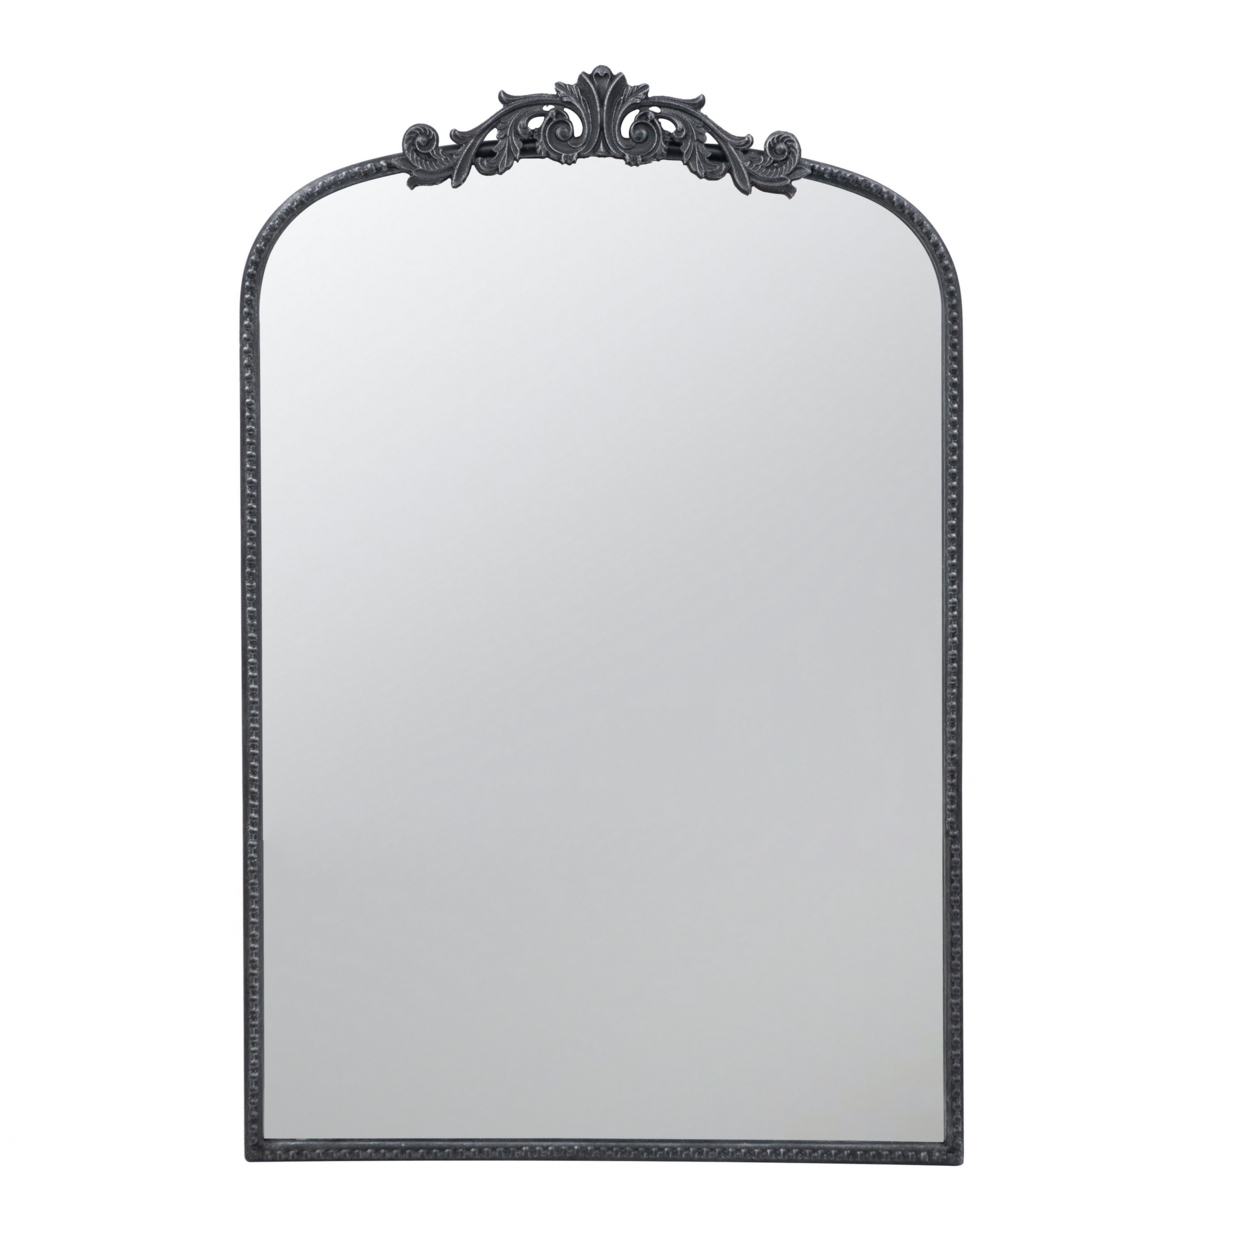 Kea 36 Inch Wall Mirror, Black Curved Metal Frame, Baroque Accent Design- Saltoro Sherpi